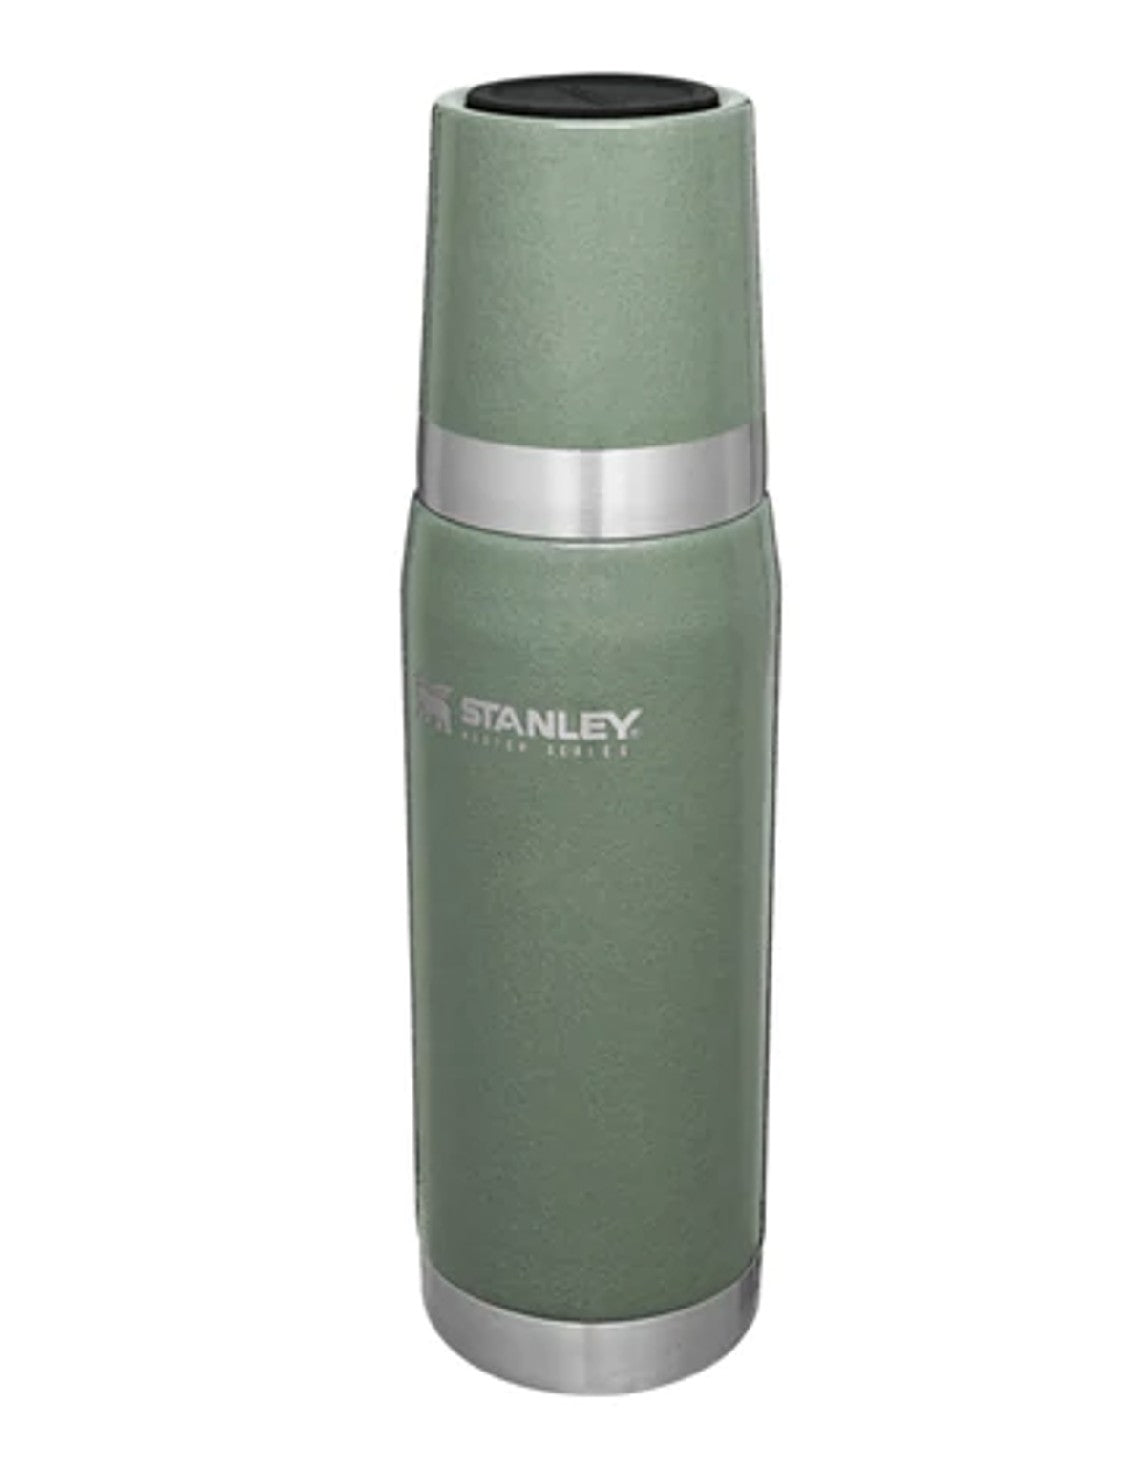 Stanley 1.5 qt Classic Hammertone Green BPA Free Vacuum Insulated